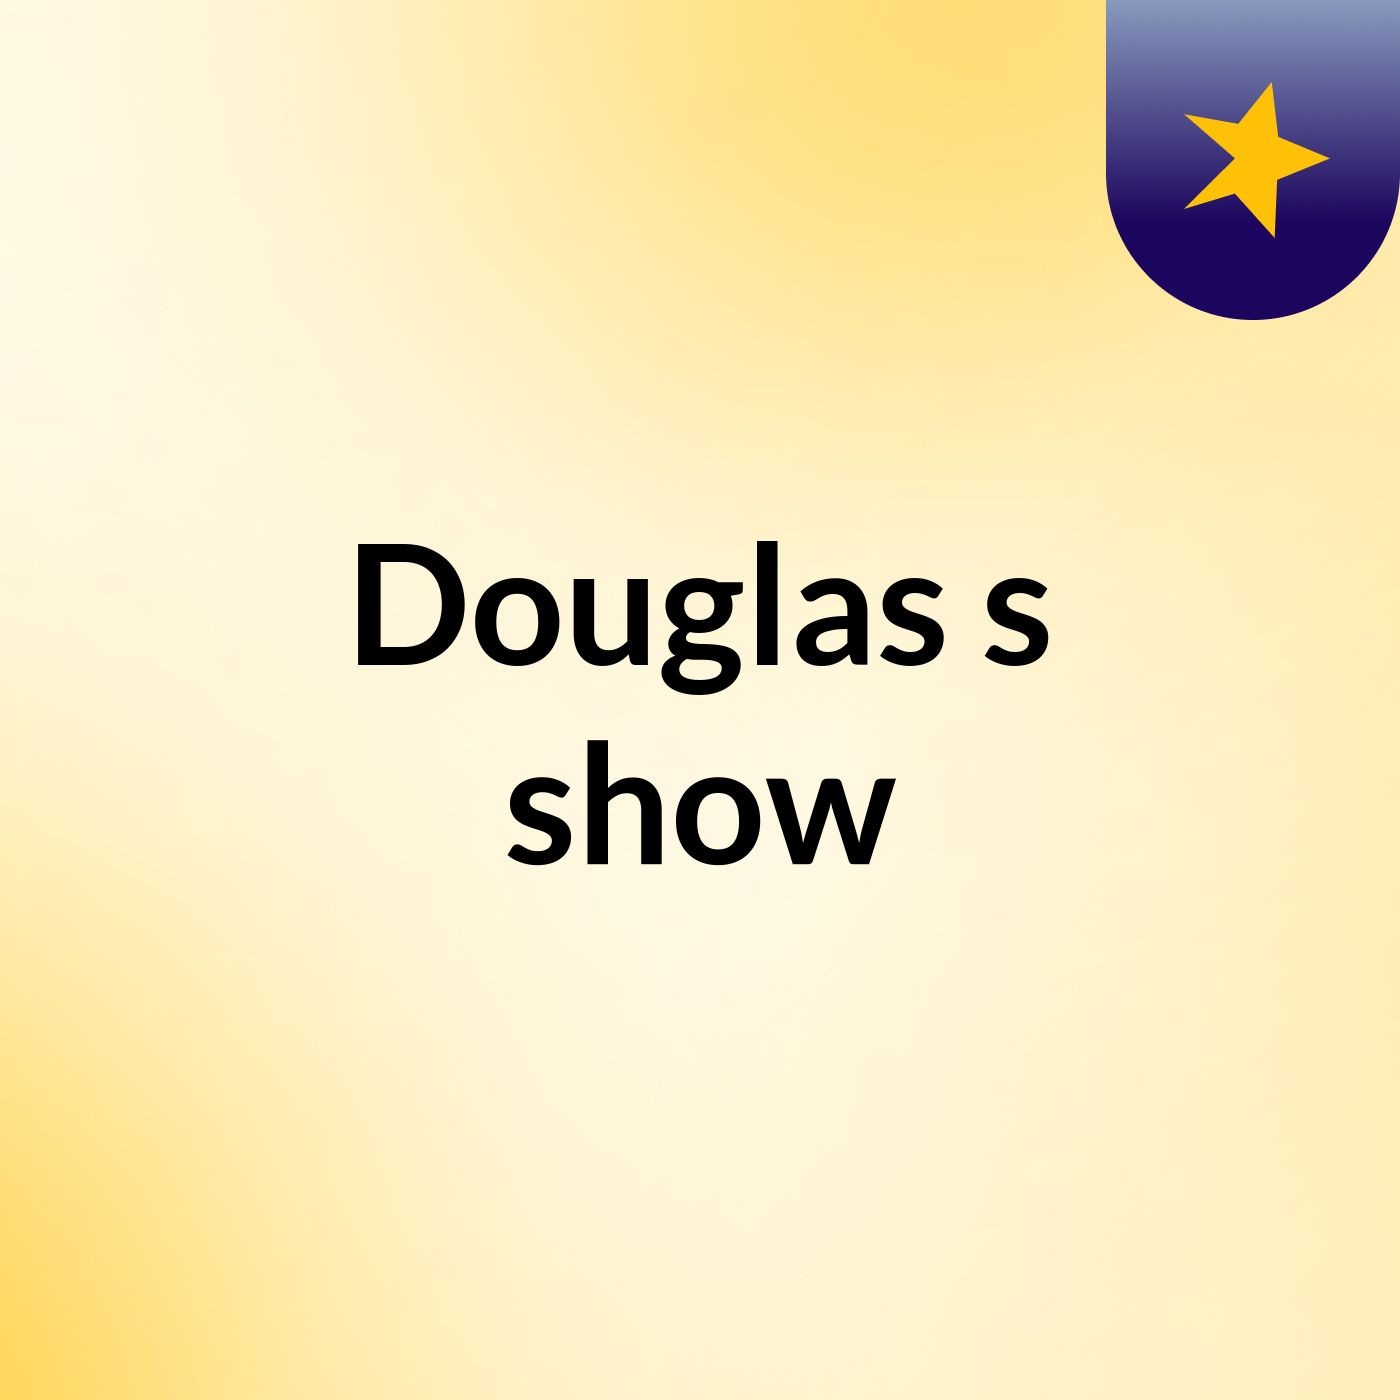 Douglas's show